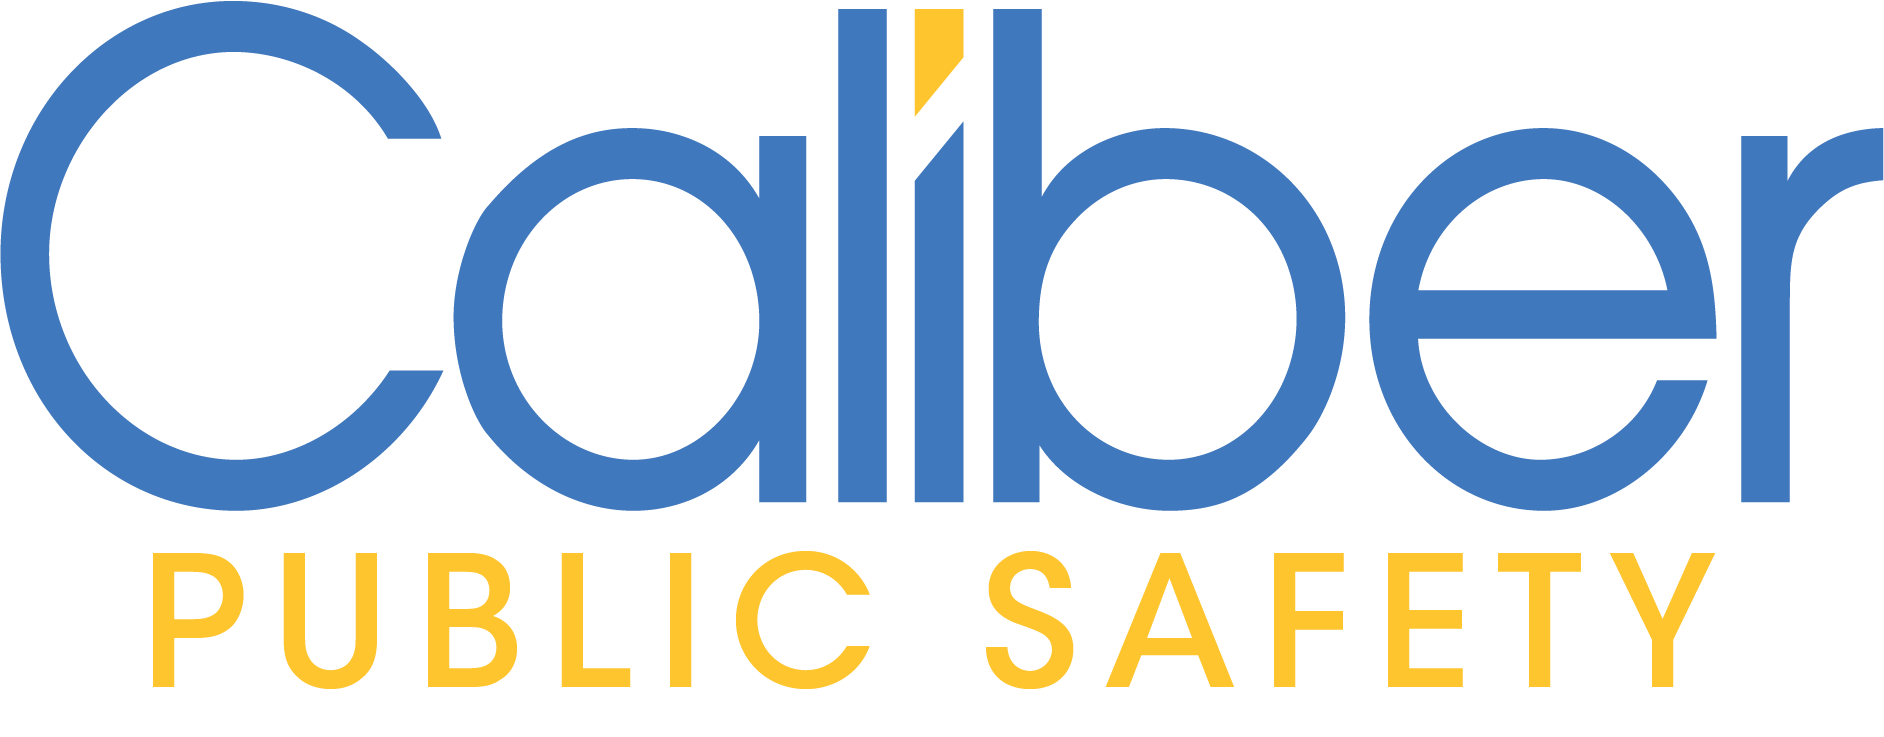 Caliber Public Safety Logo